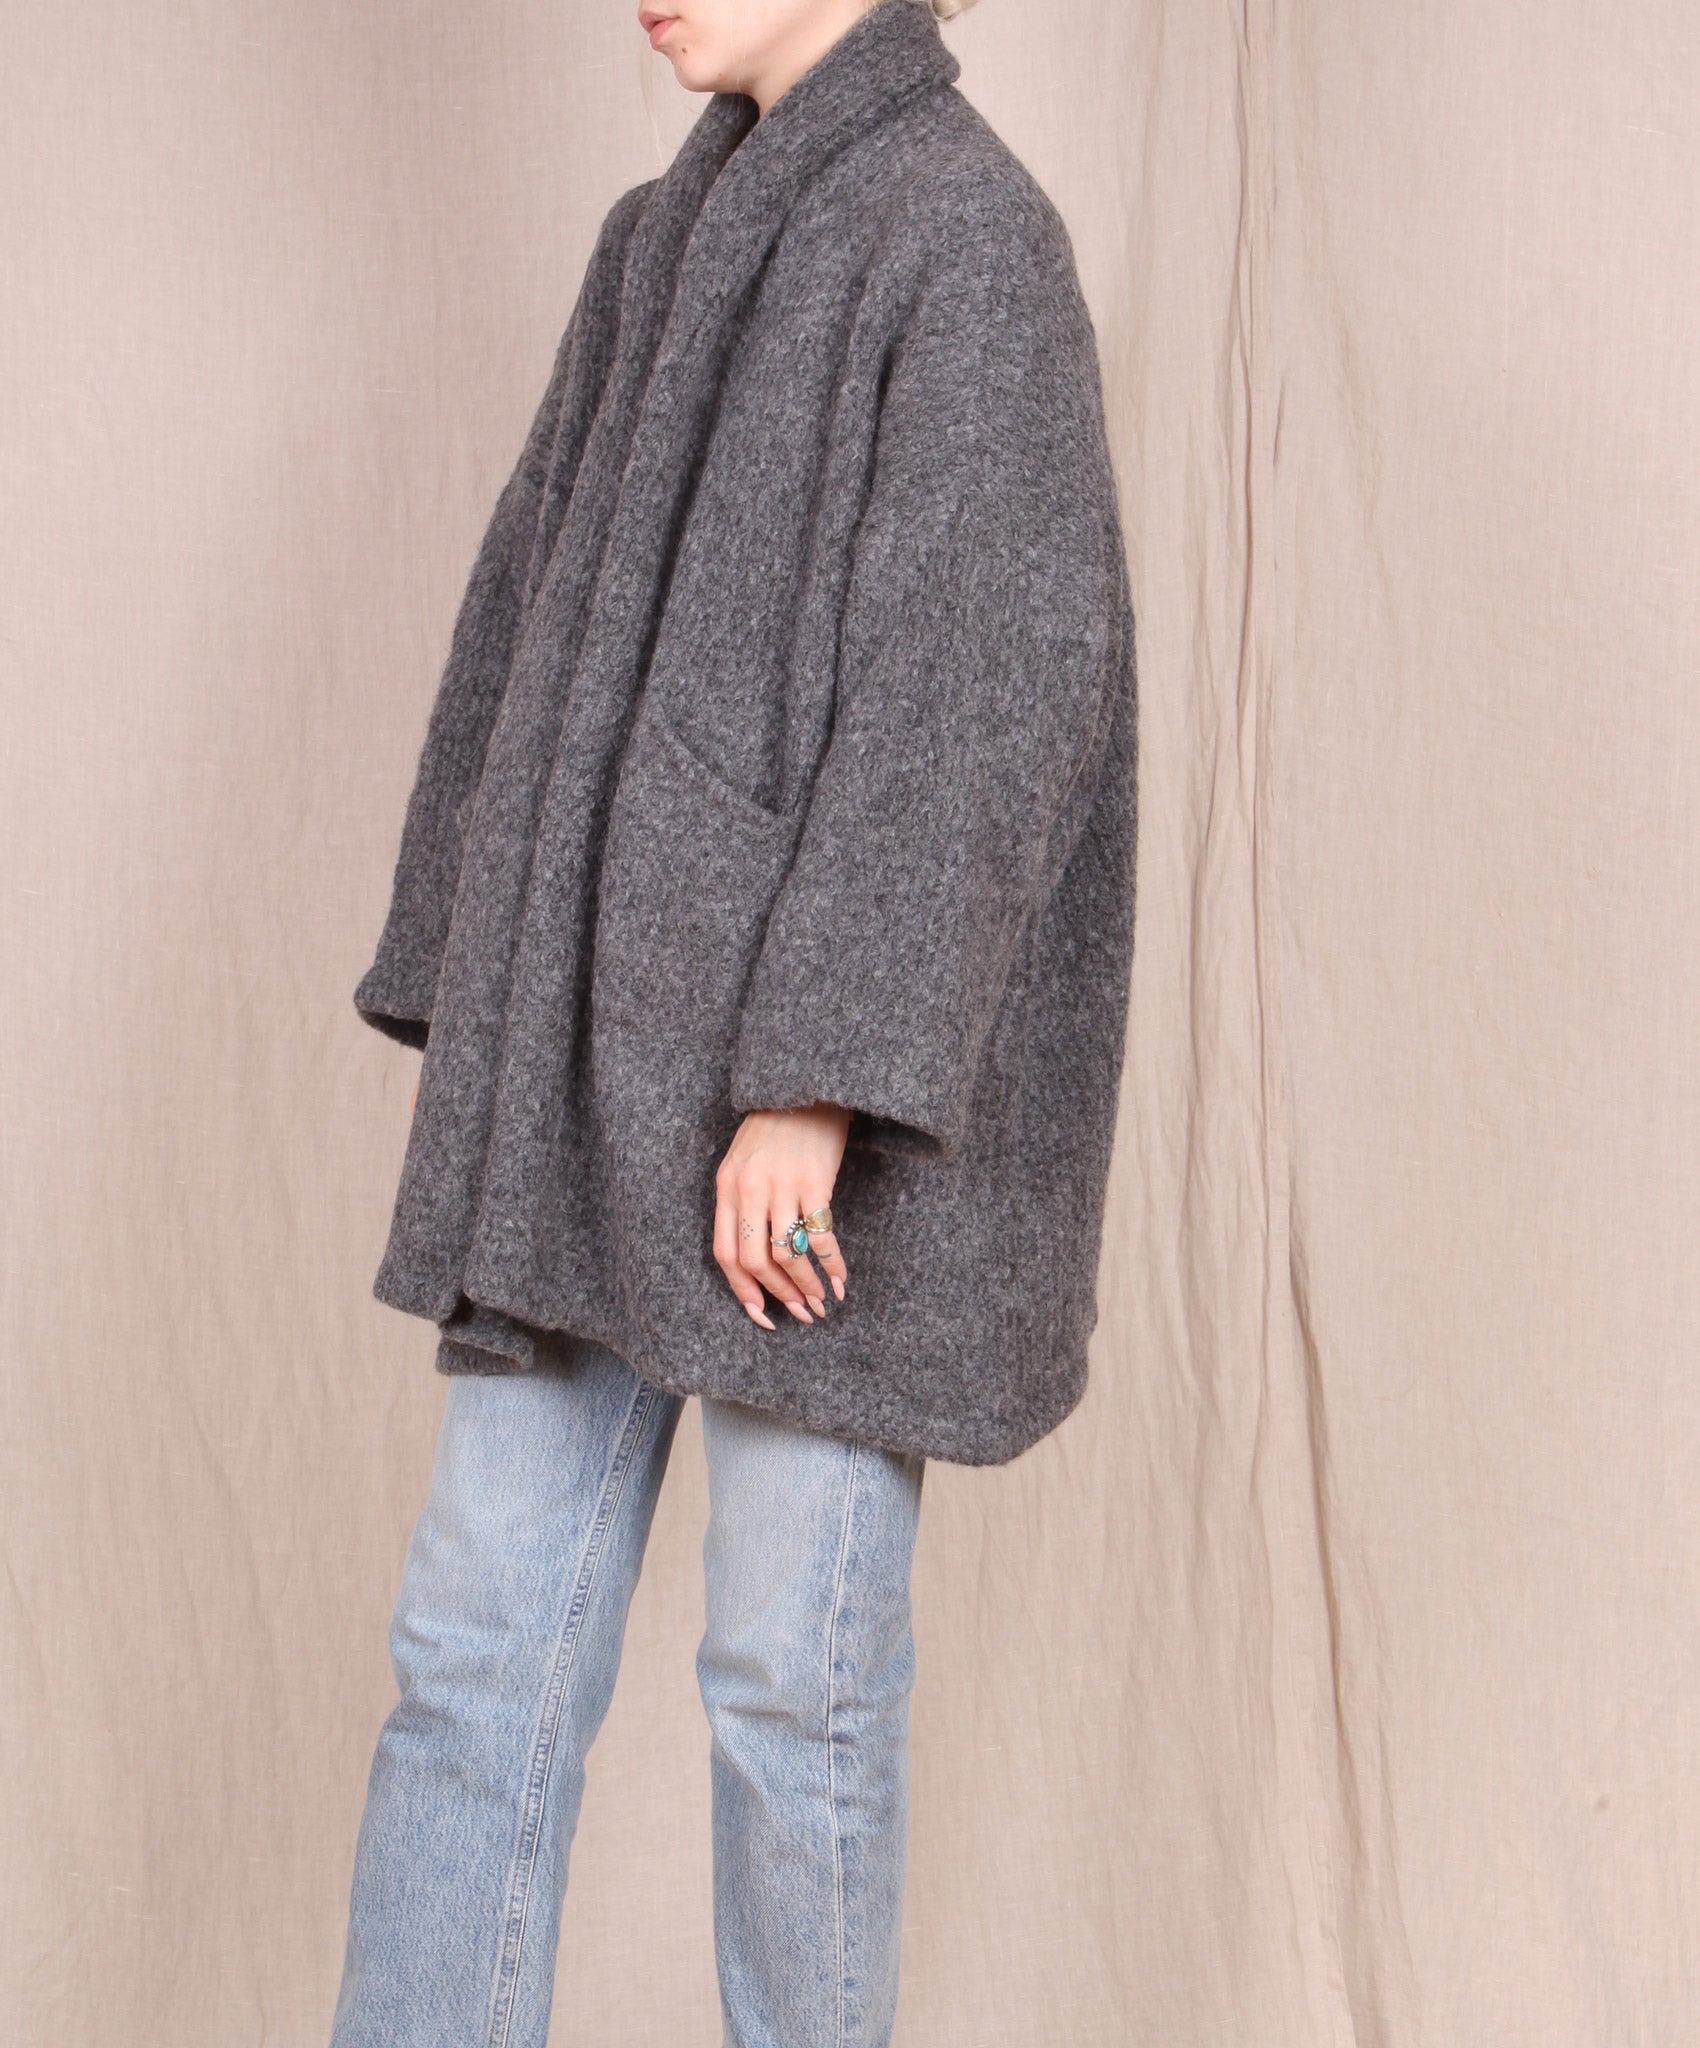 Atelier Delphine-Haori Sweater Coat // CHARCOAL